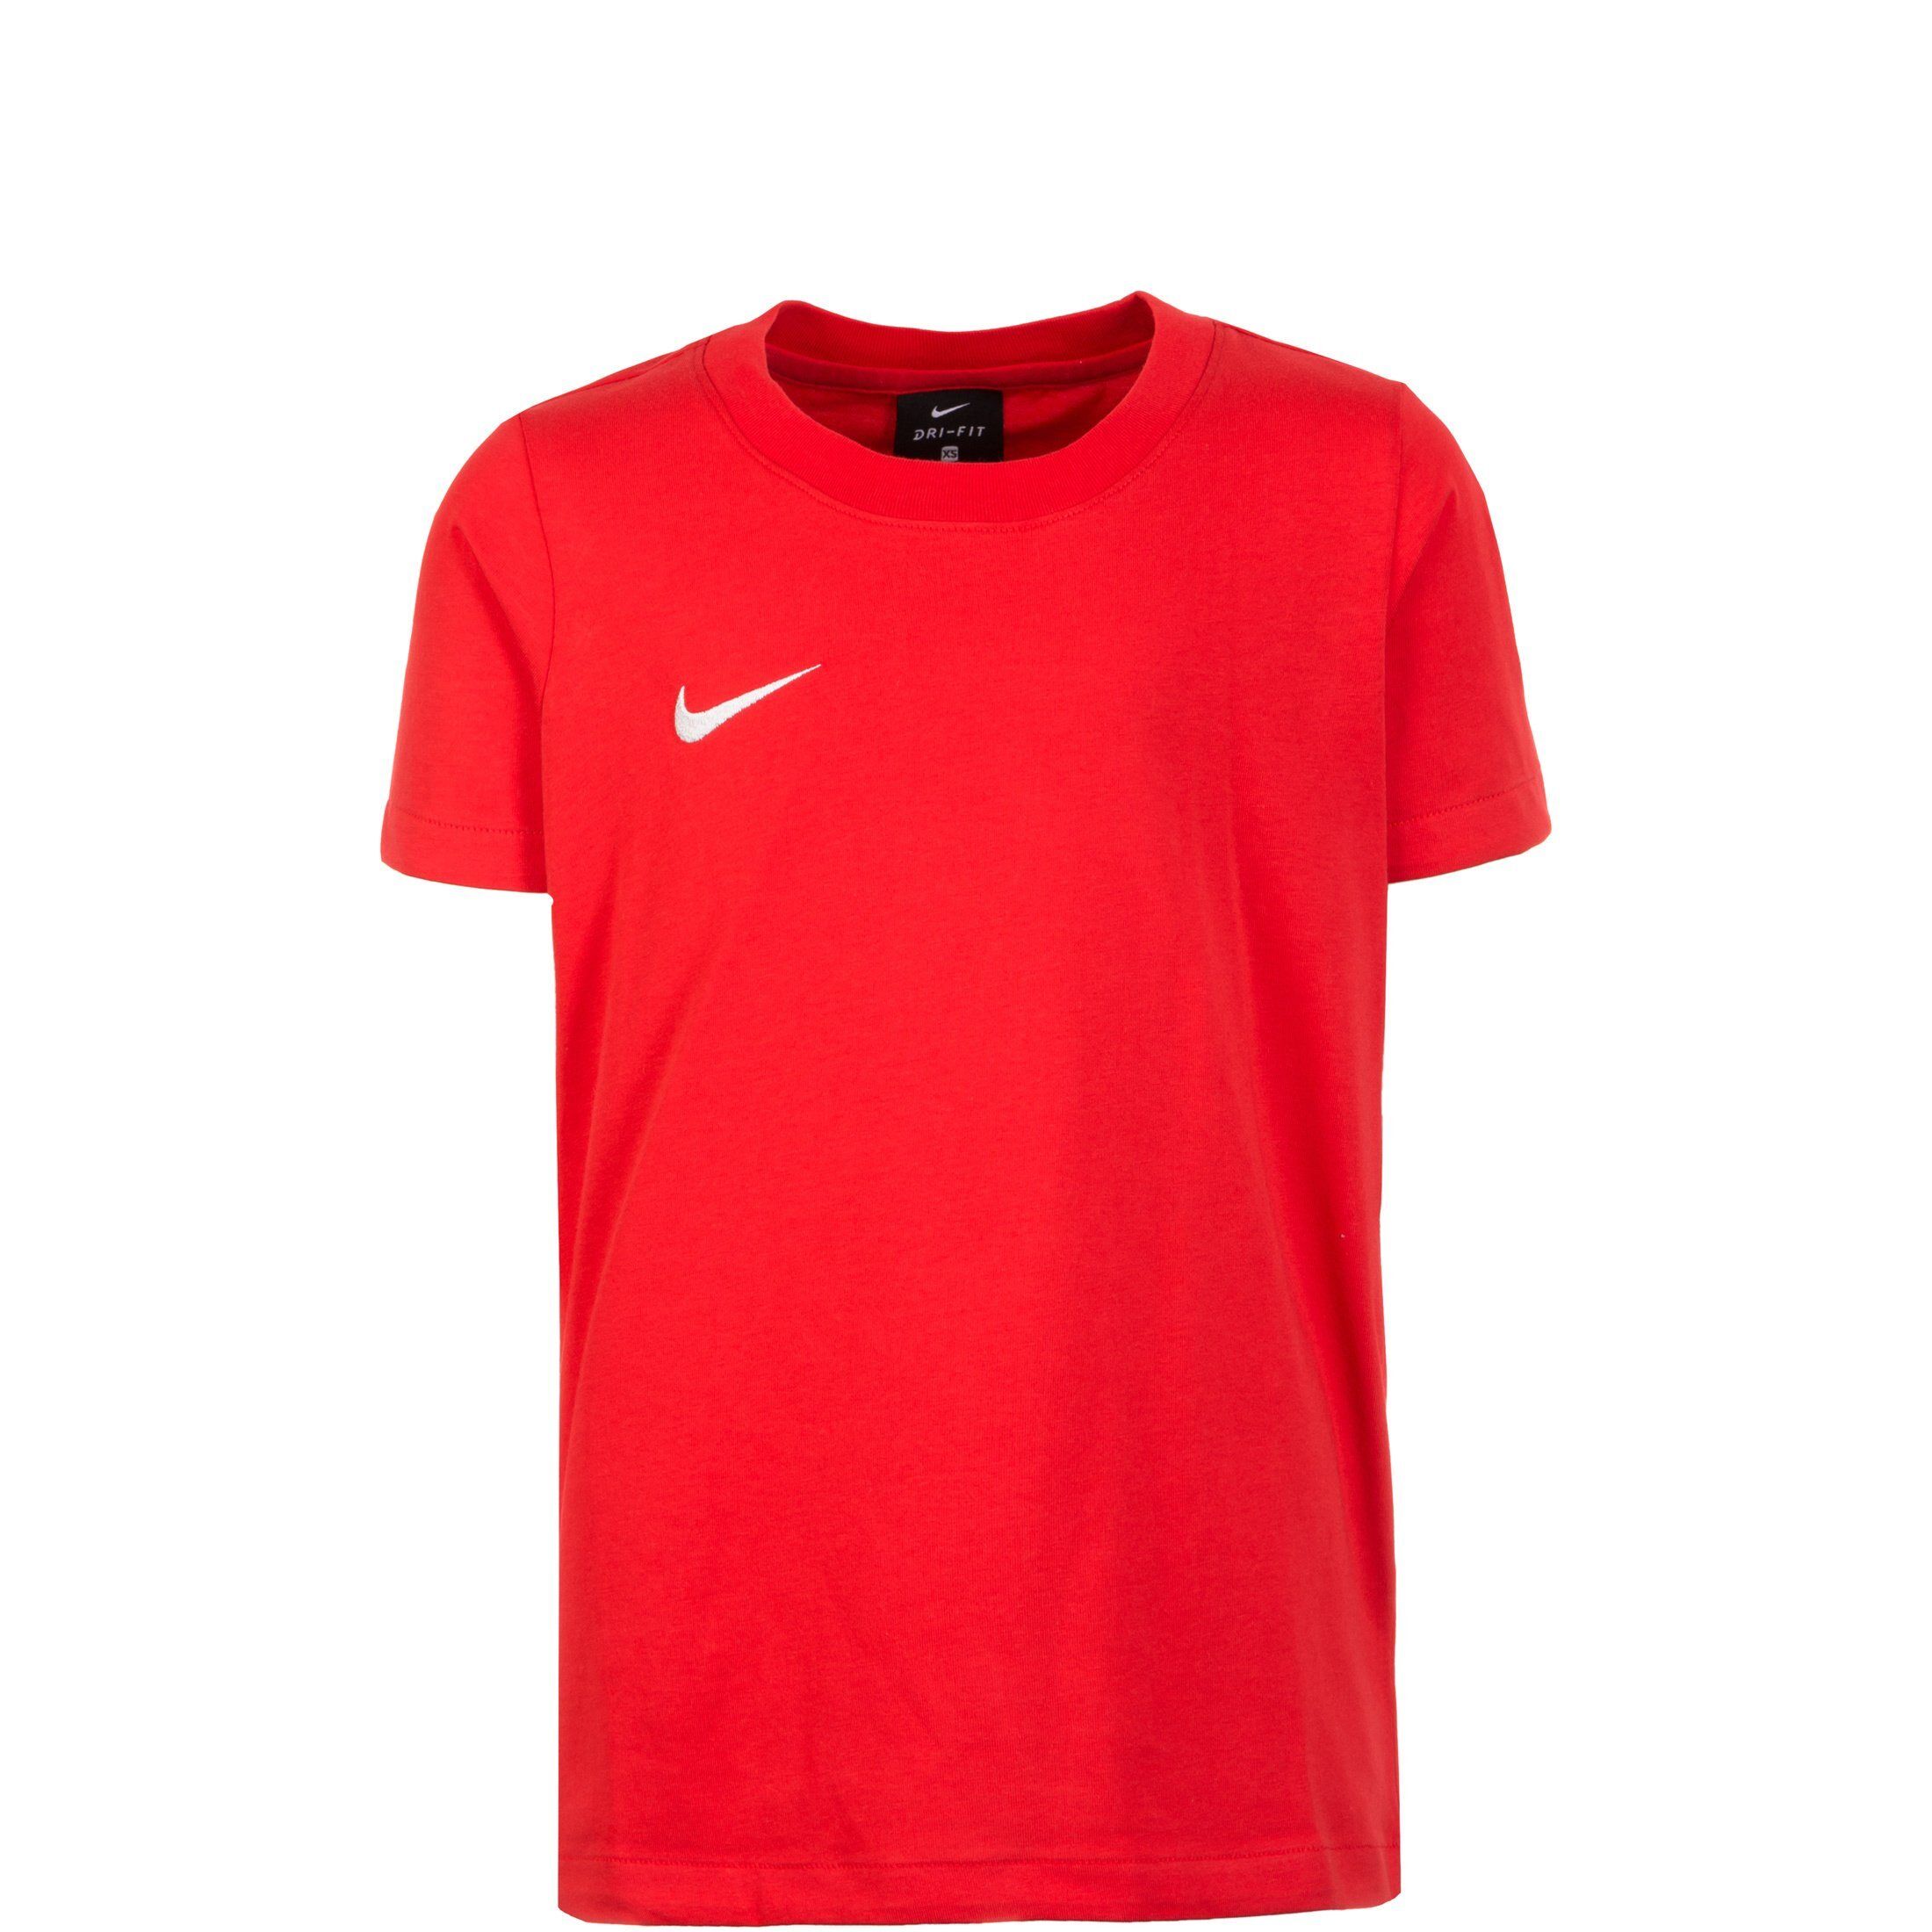 Nike Trainingsshirt »Club19 Tm«, university red / white